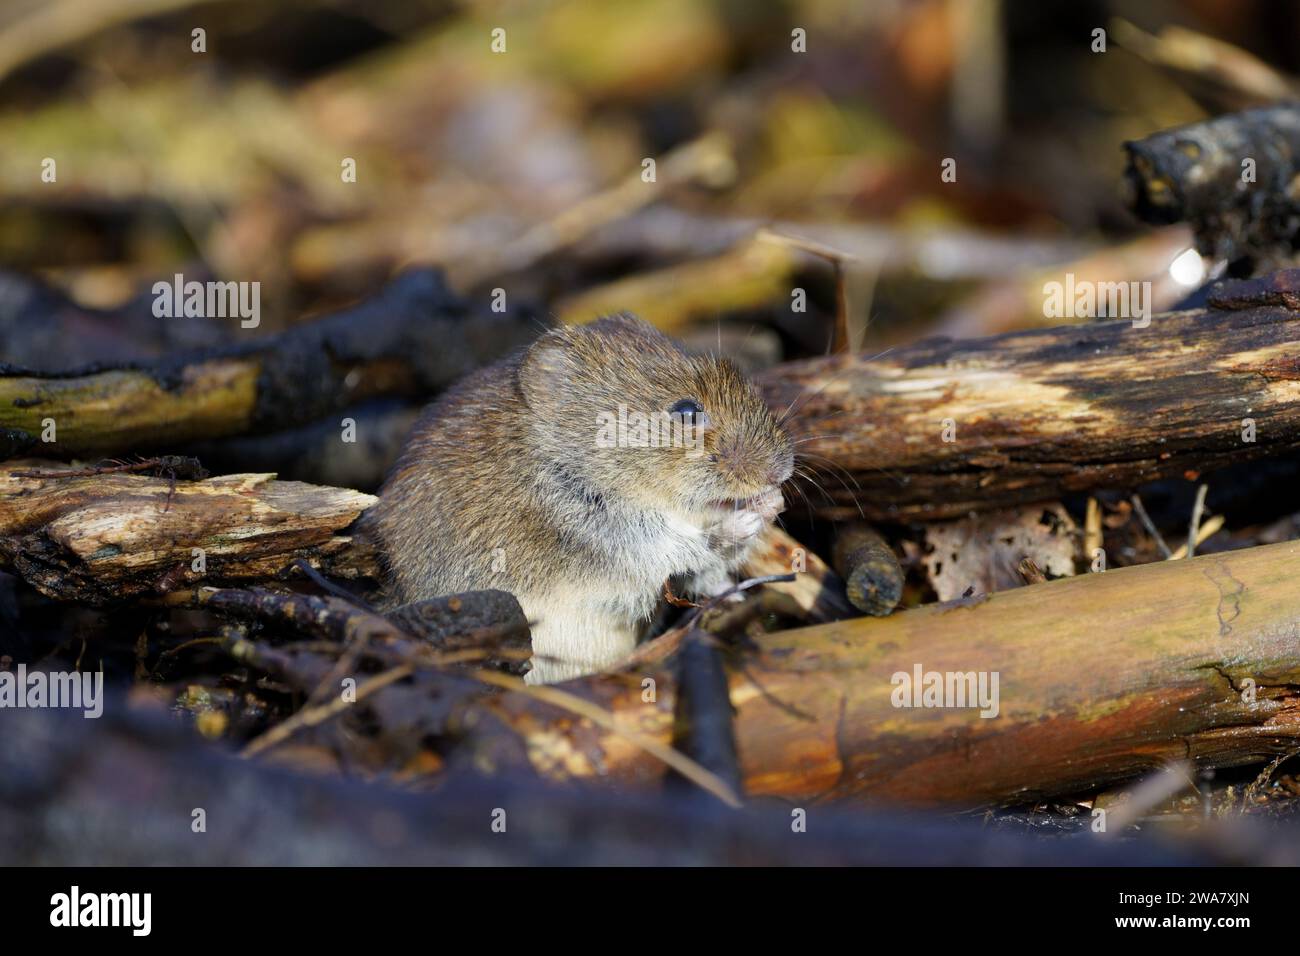 vole in action hidden in woodpile Stock Photo